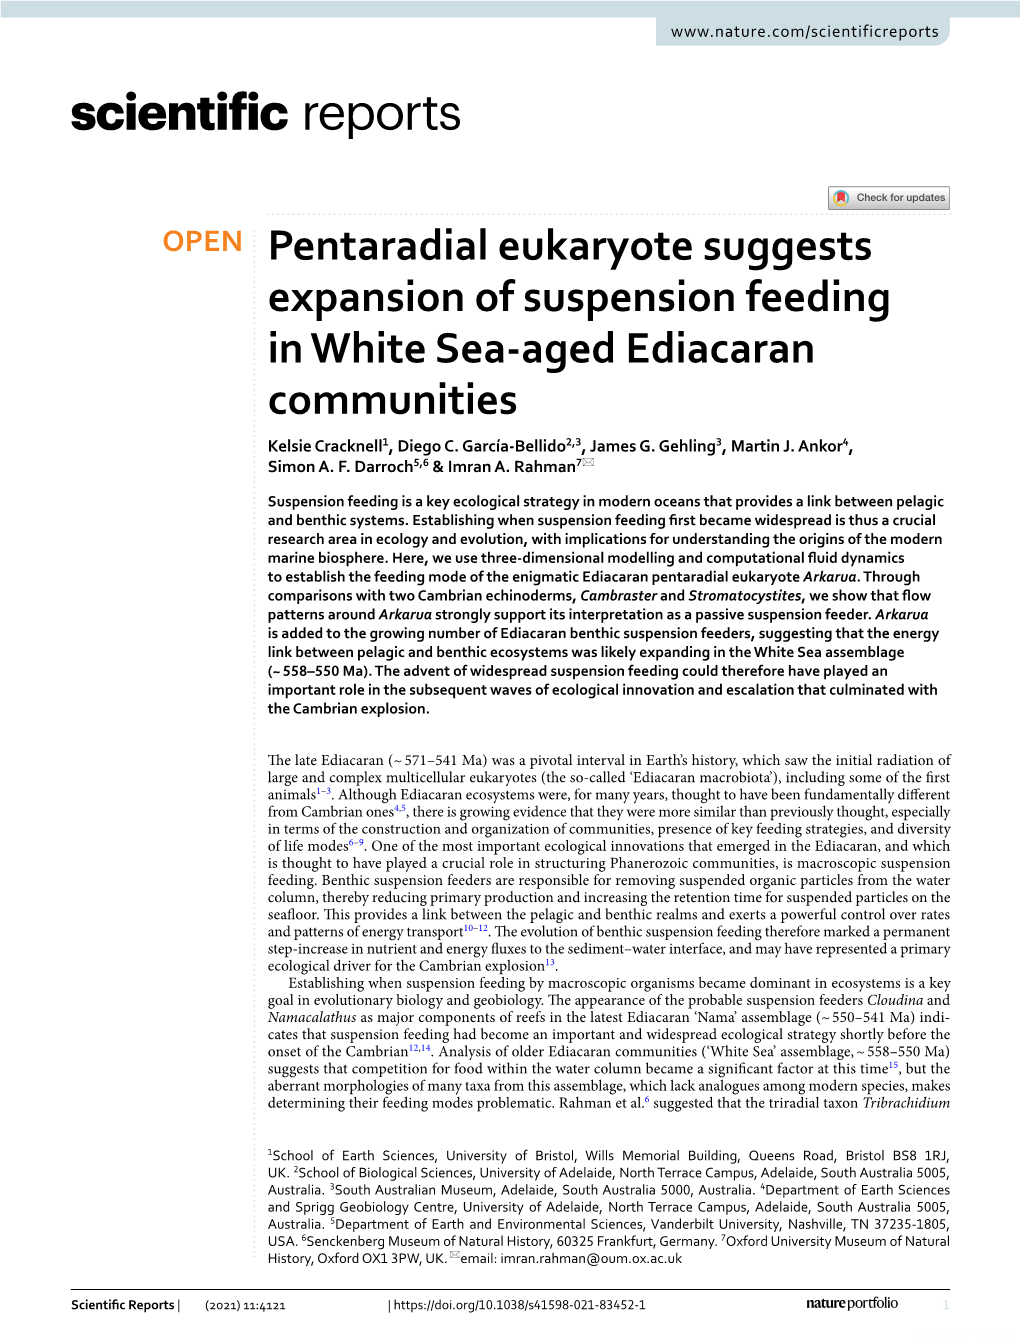 Pentaradial Eukaryote Suggests Expansion of Suspension Feeding in White Sea‑Aged Ediacaran Communities Kelsie Cracknell1, Diego C